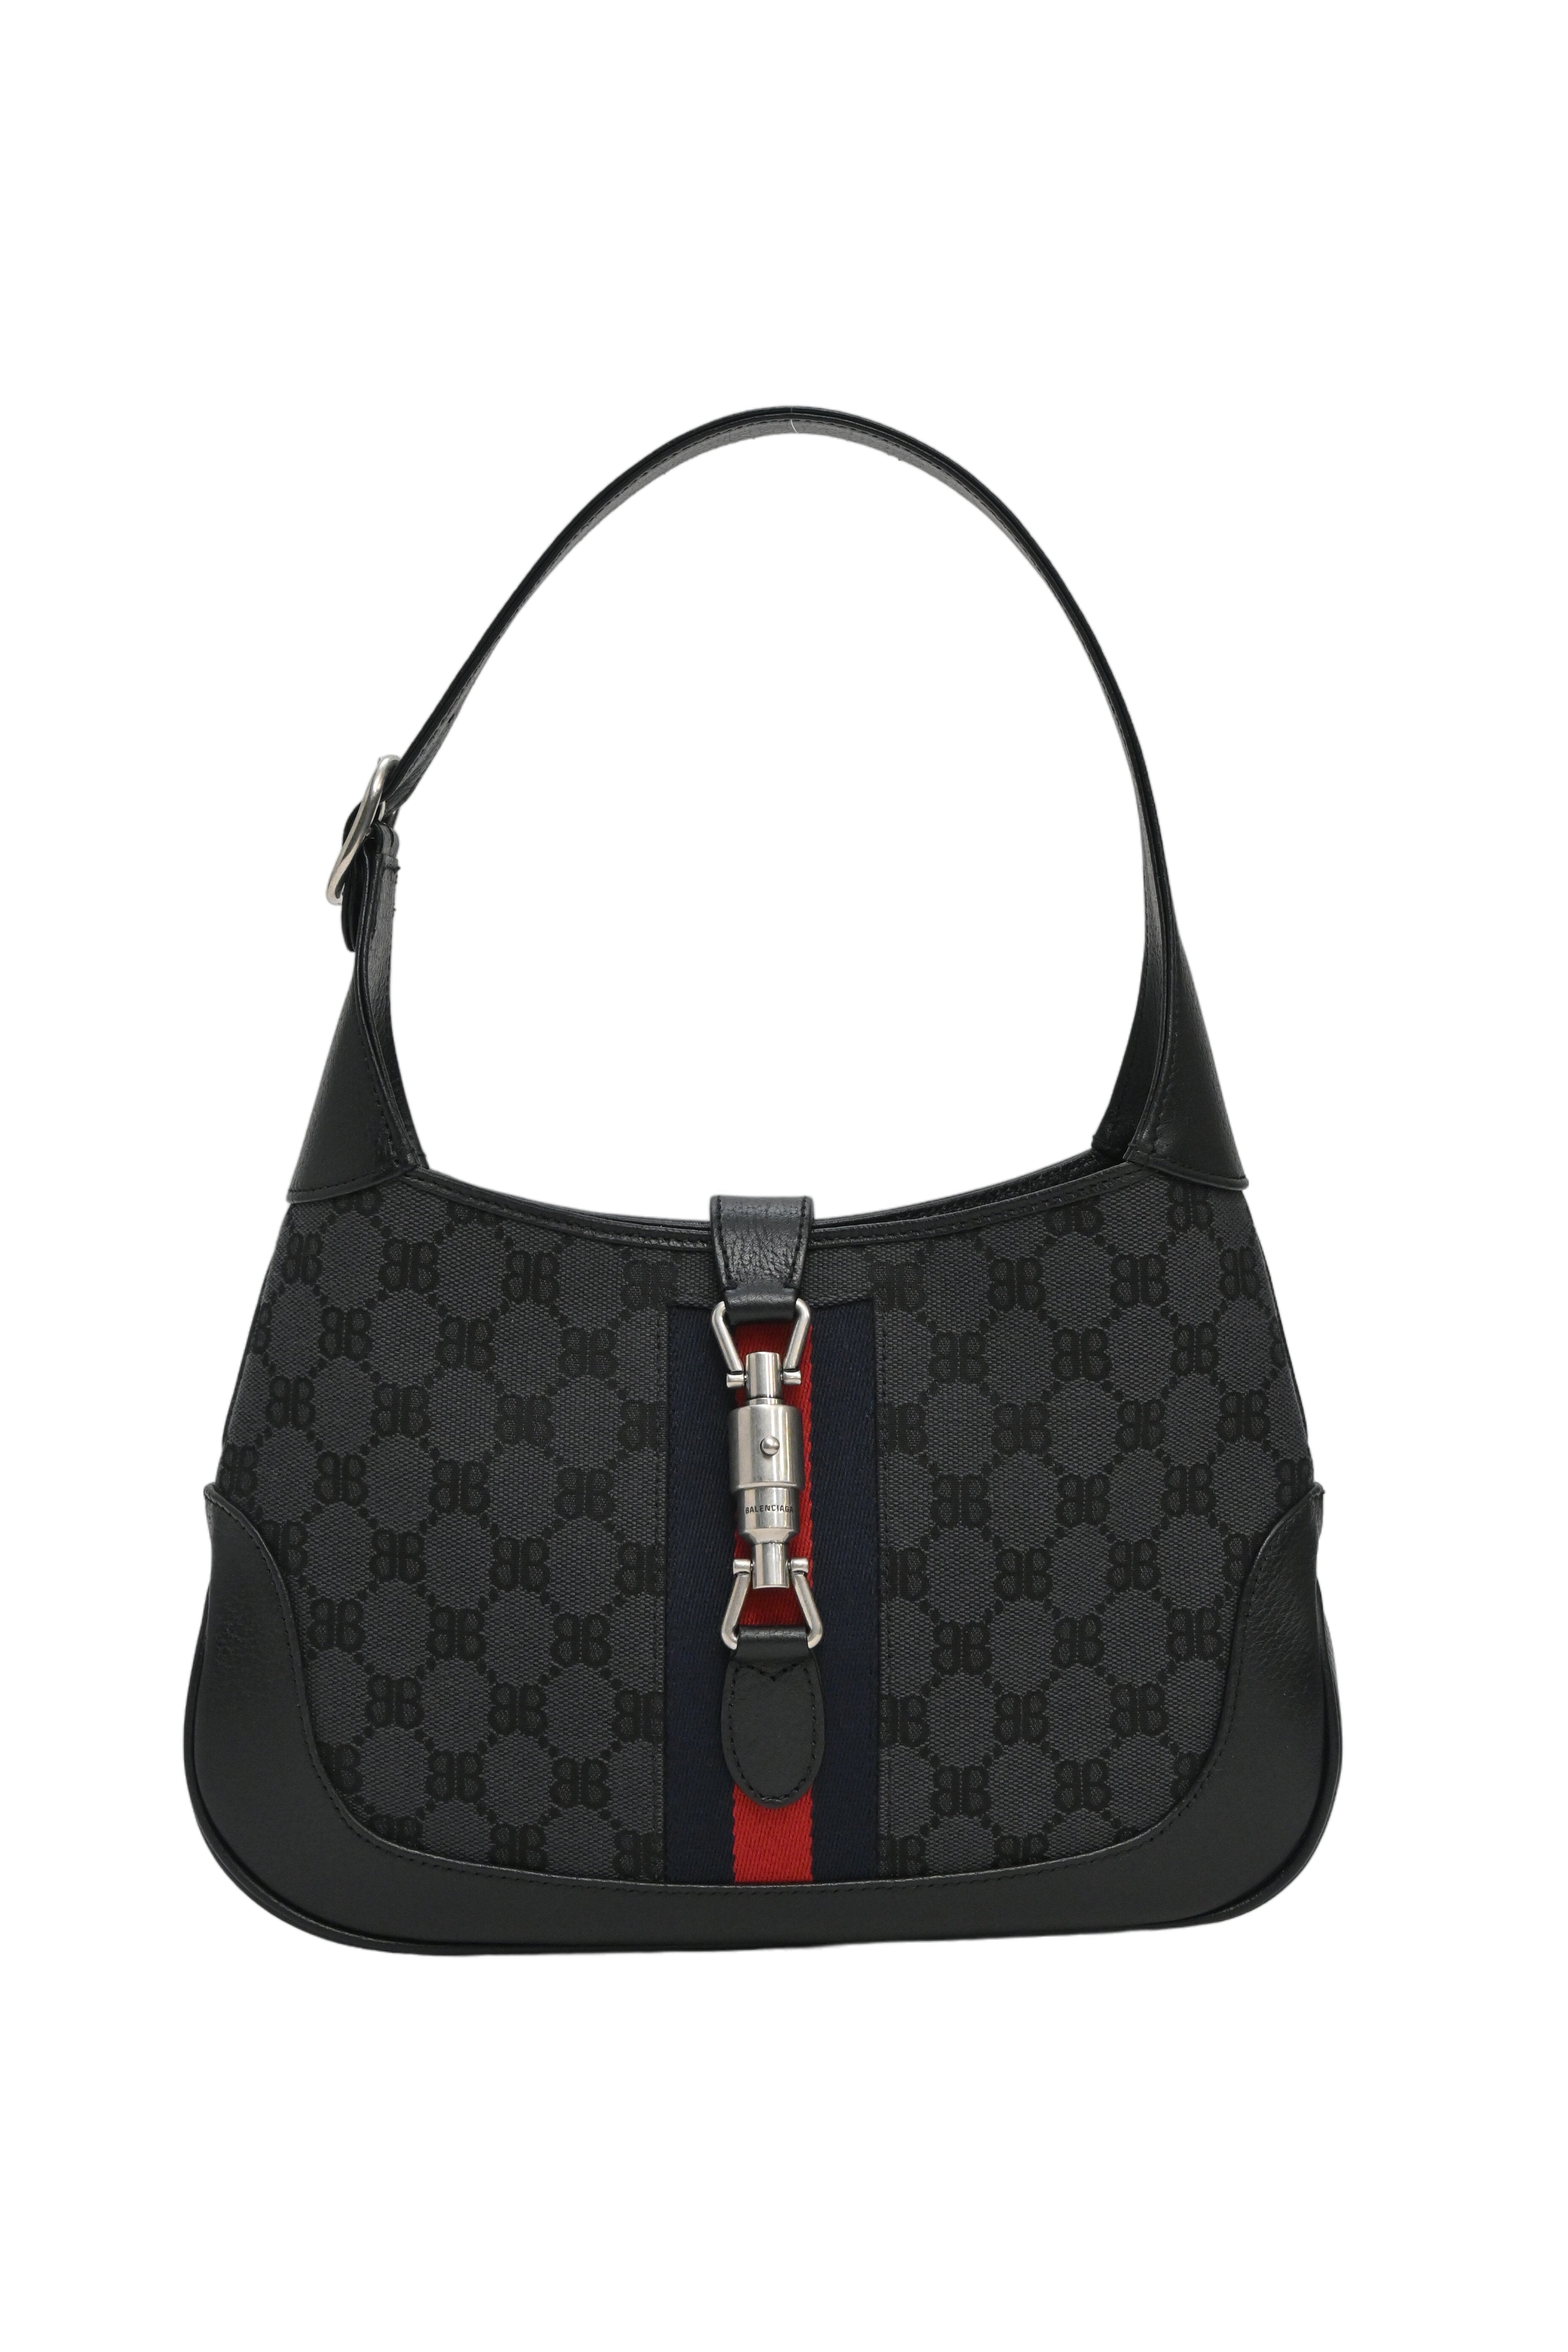 Amazon.com: Gucci Bags For Women Handbag